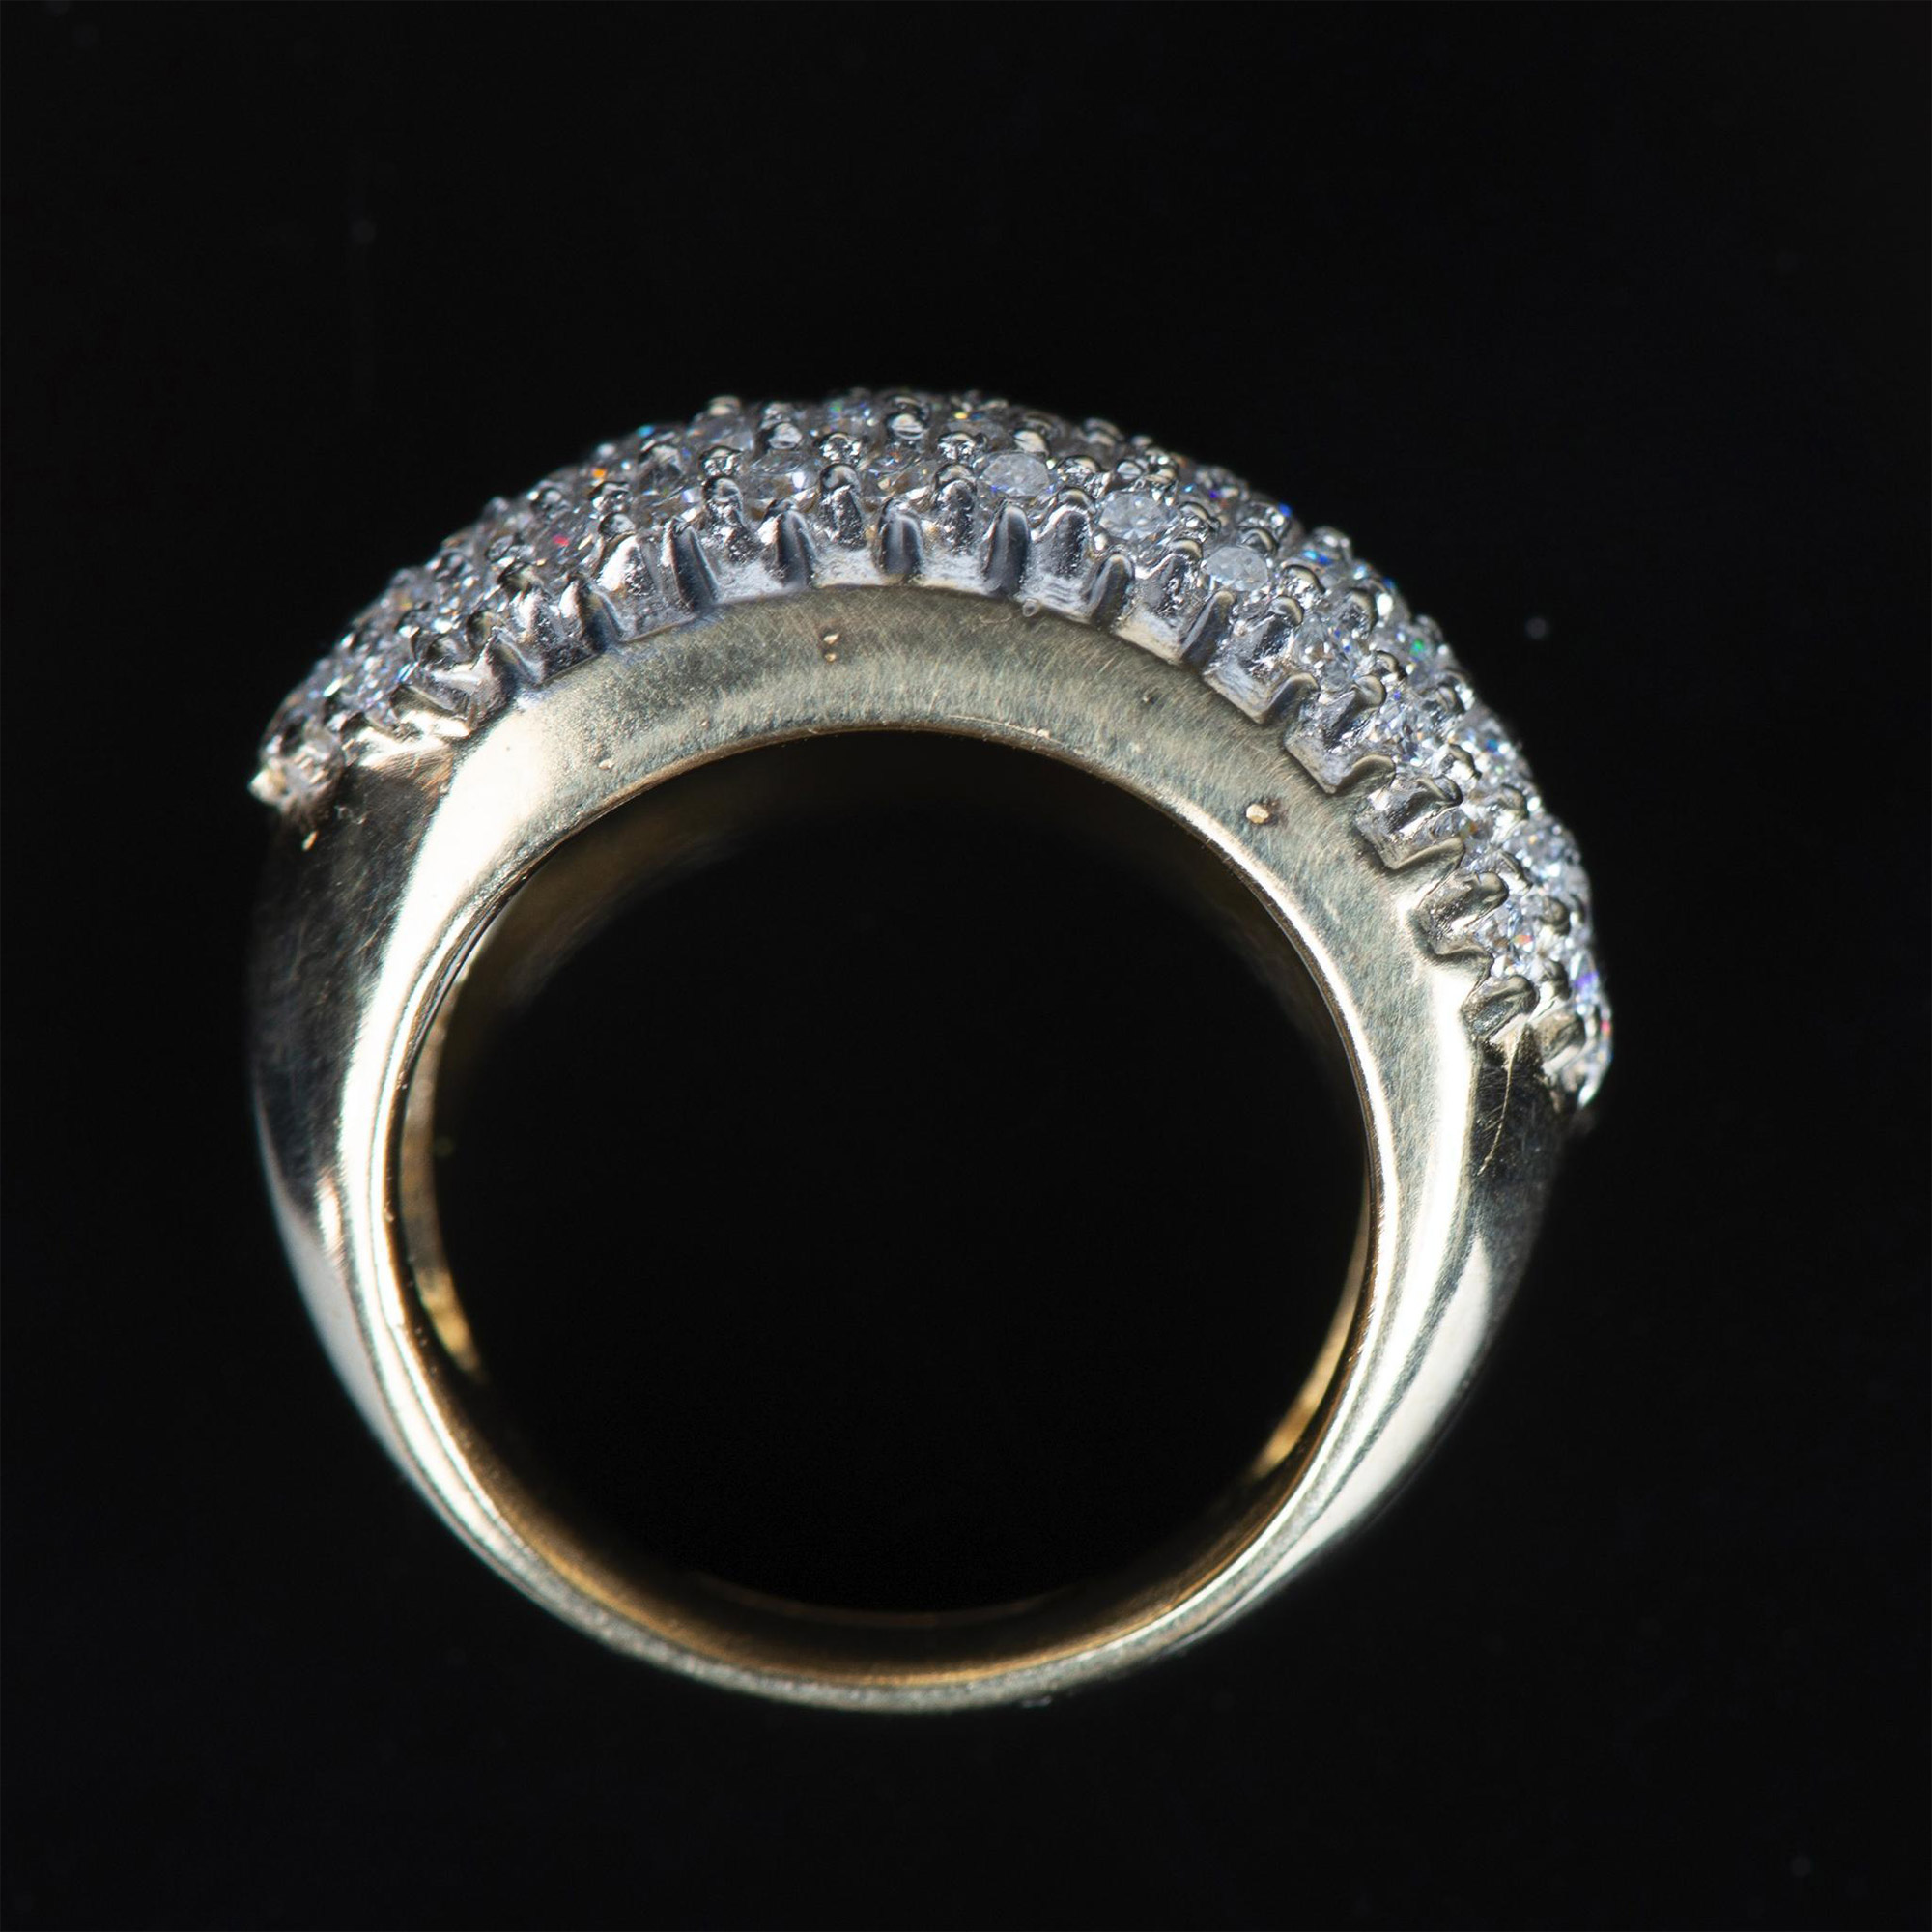 Stunning 14K Yellow Gold & Diamond Ring - Image 4 of 7